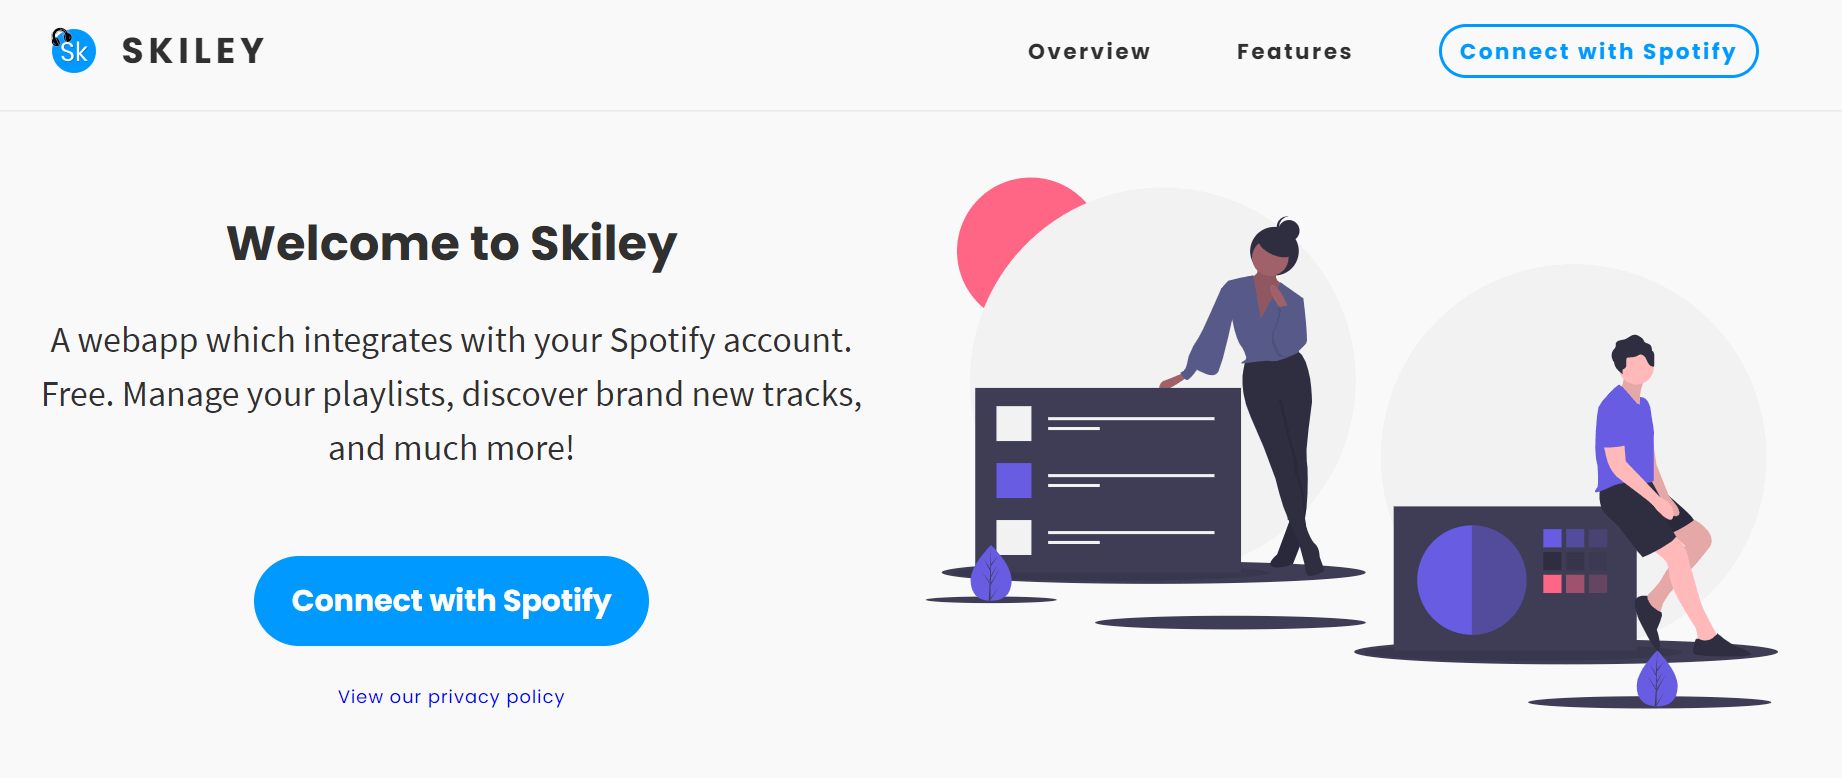 Skiley homepage